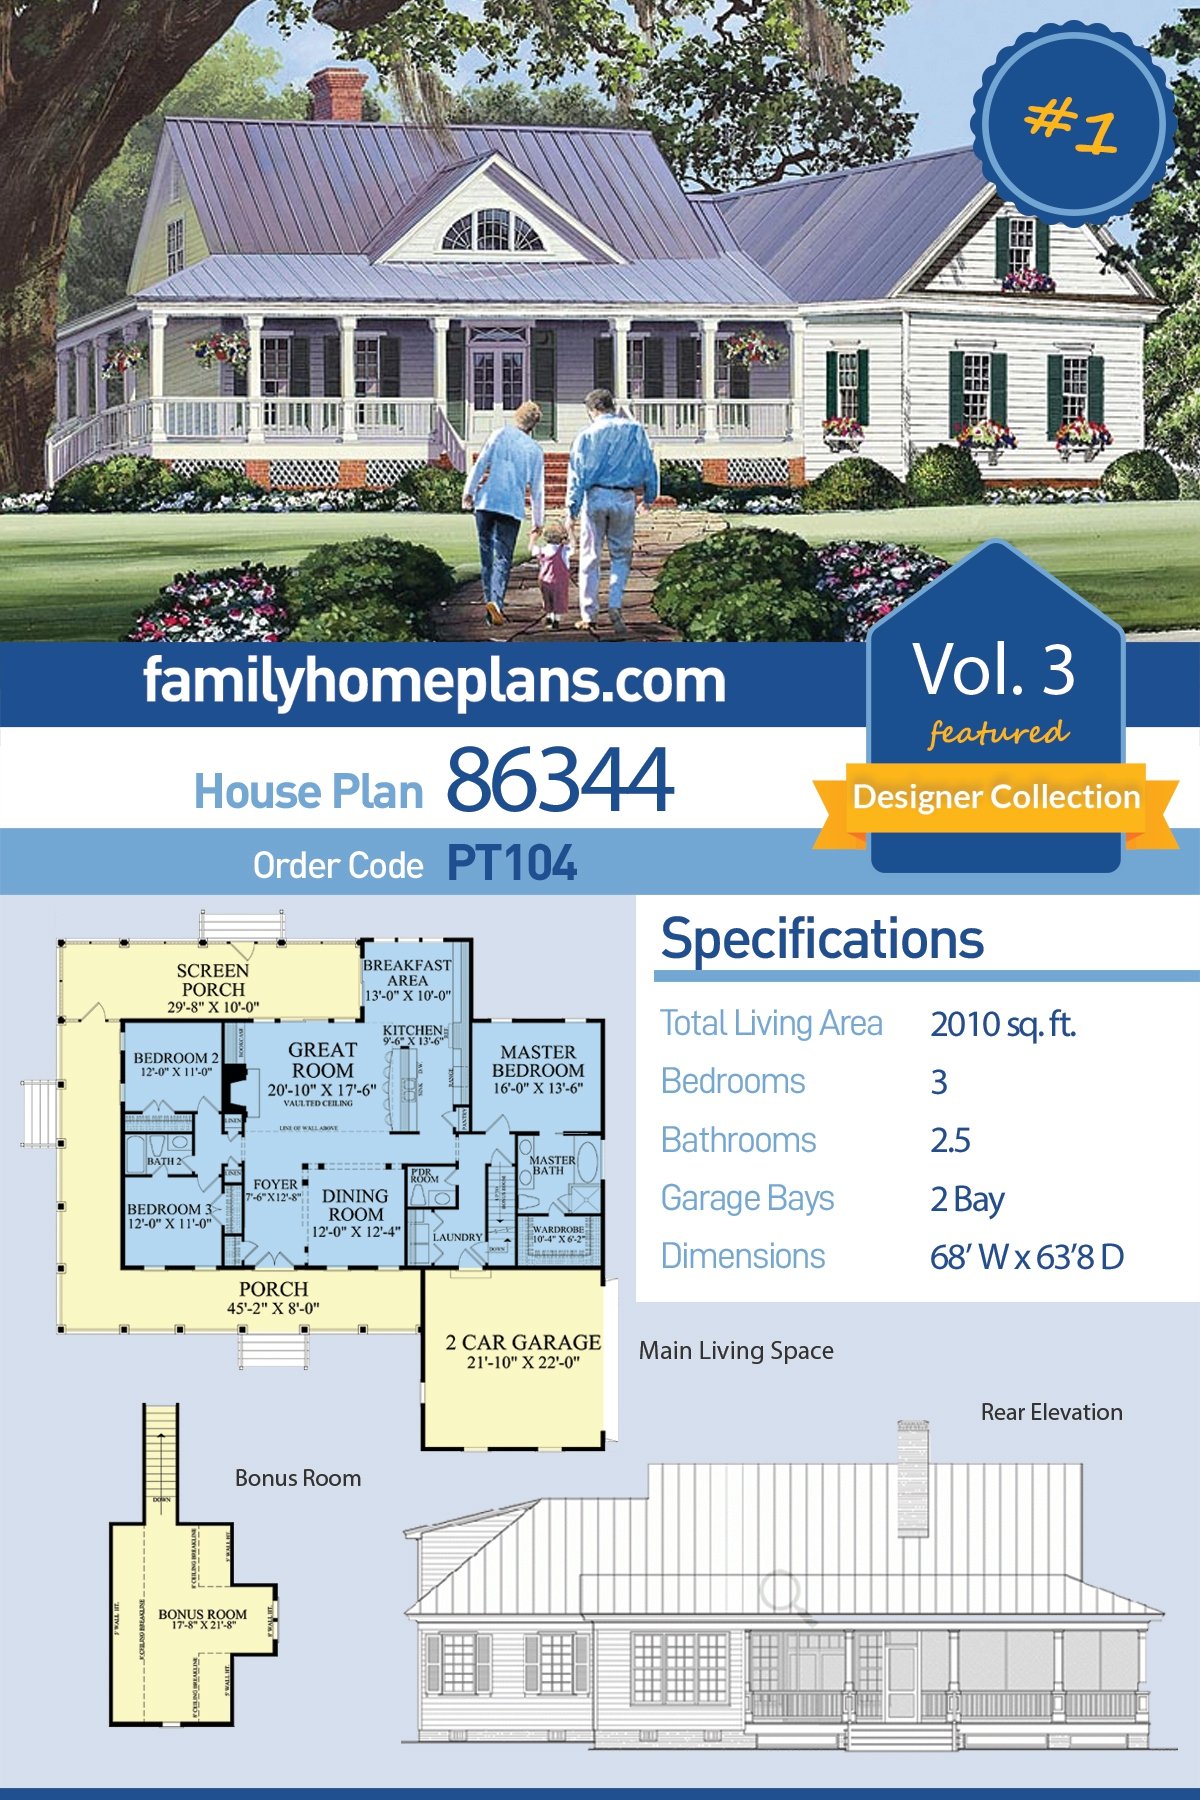 House Plan 86344